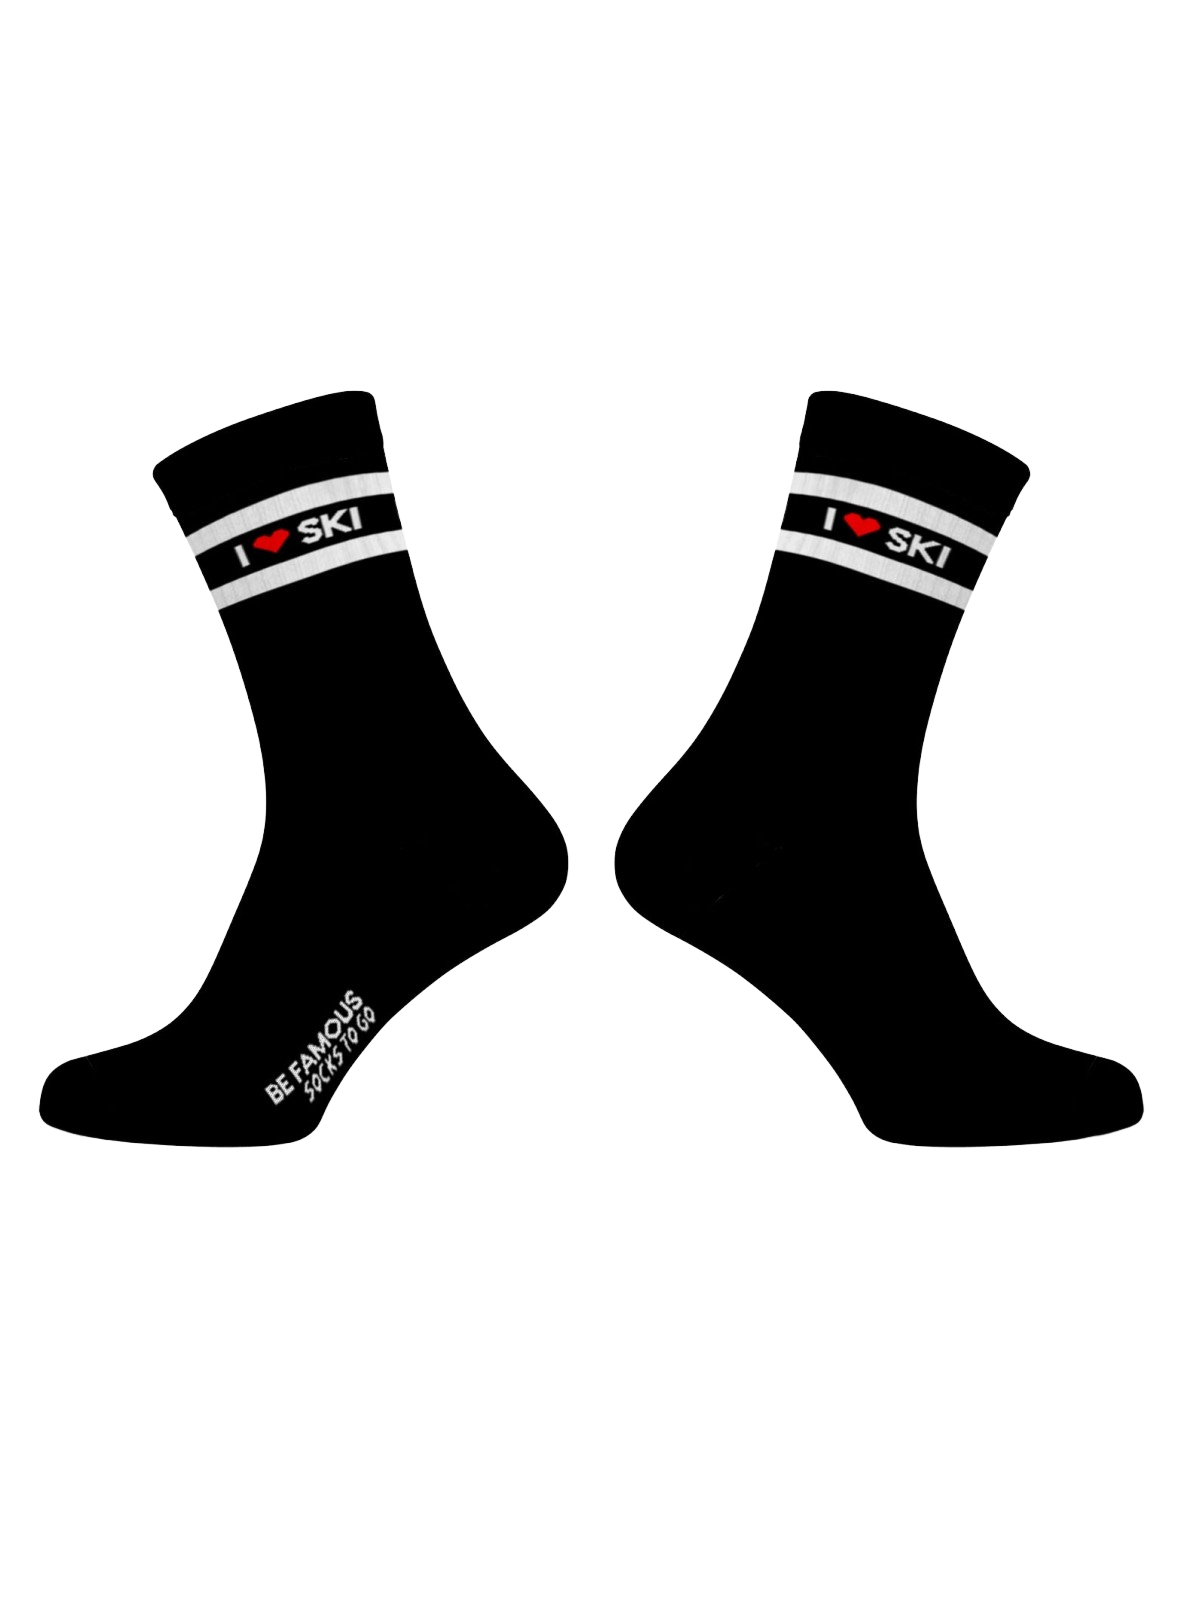 Be Famous  Socks to go  Statement  Socken  I ♥ SKI BFSO-34  black socks / white stripe / white-red ♥ statement 36-41